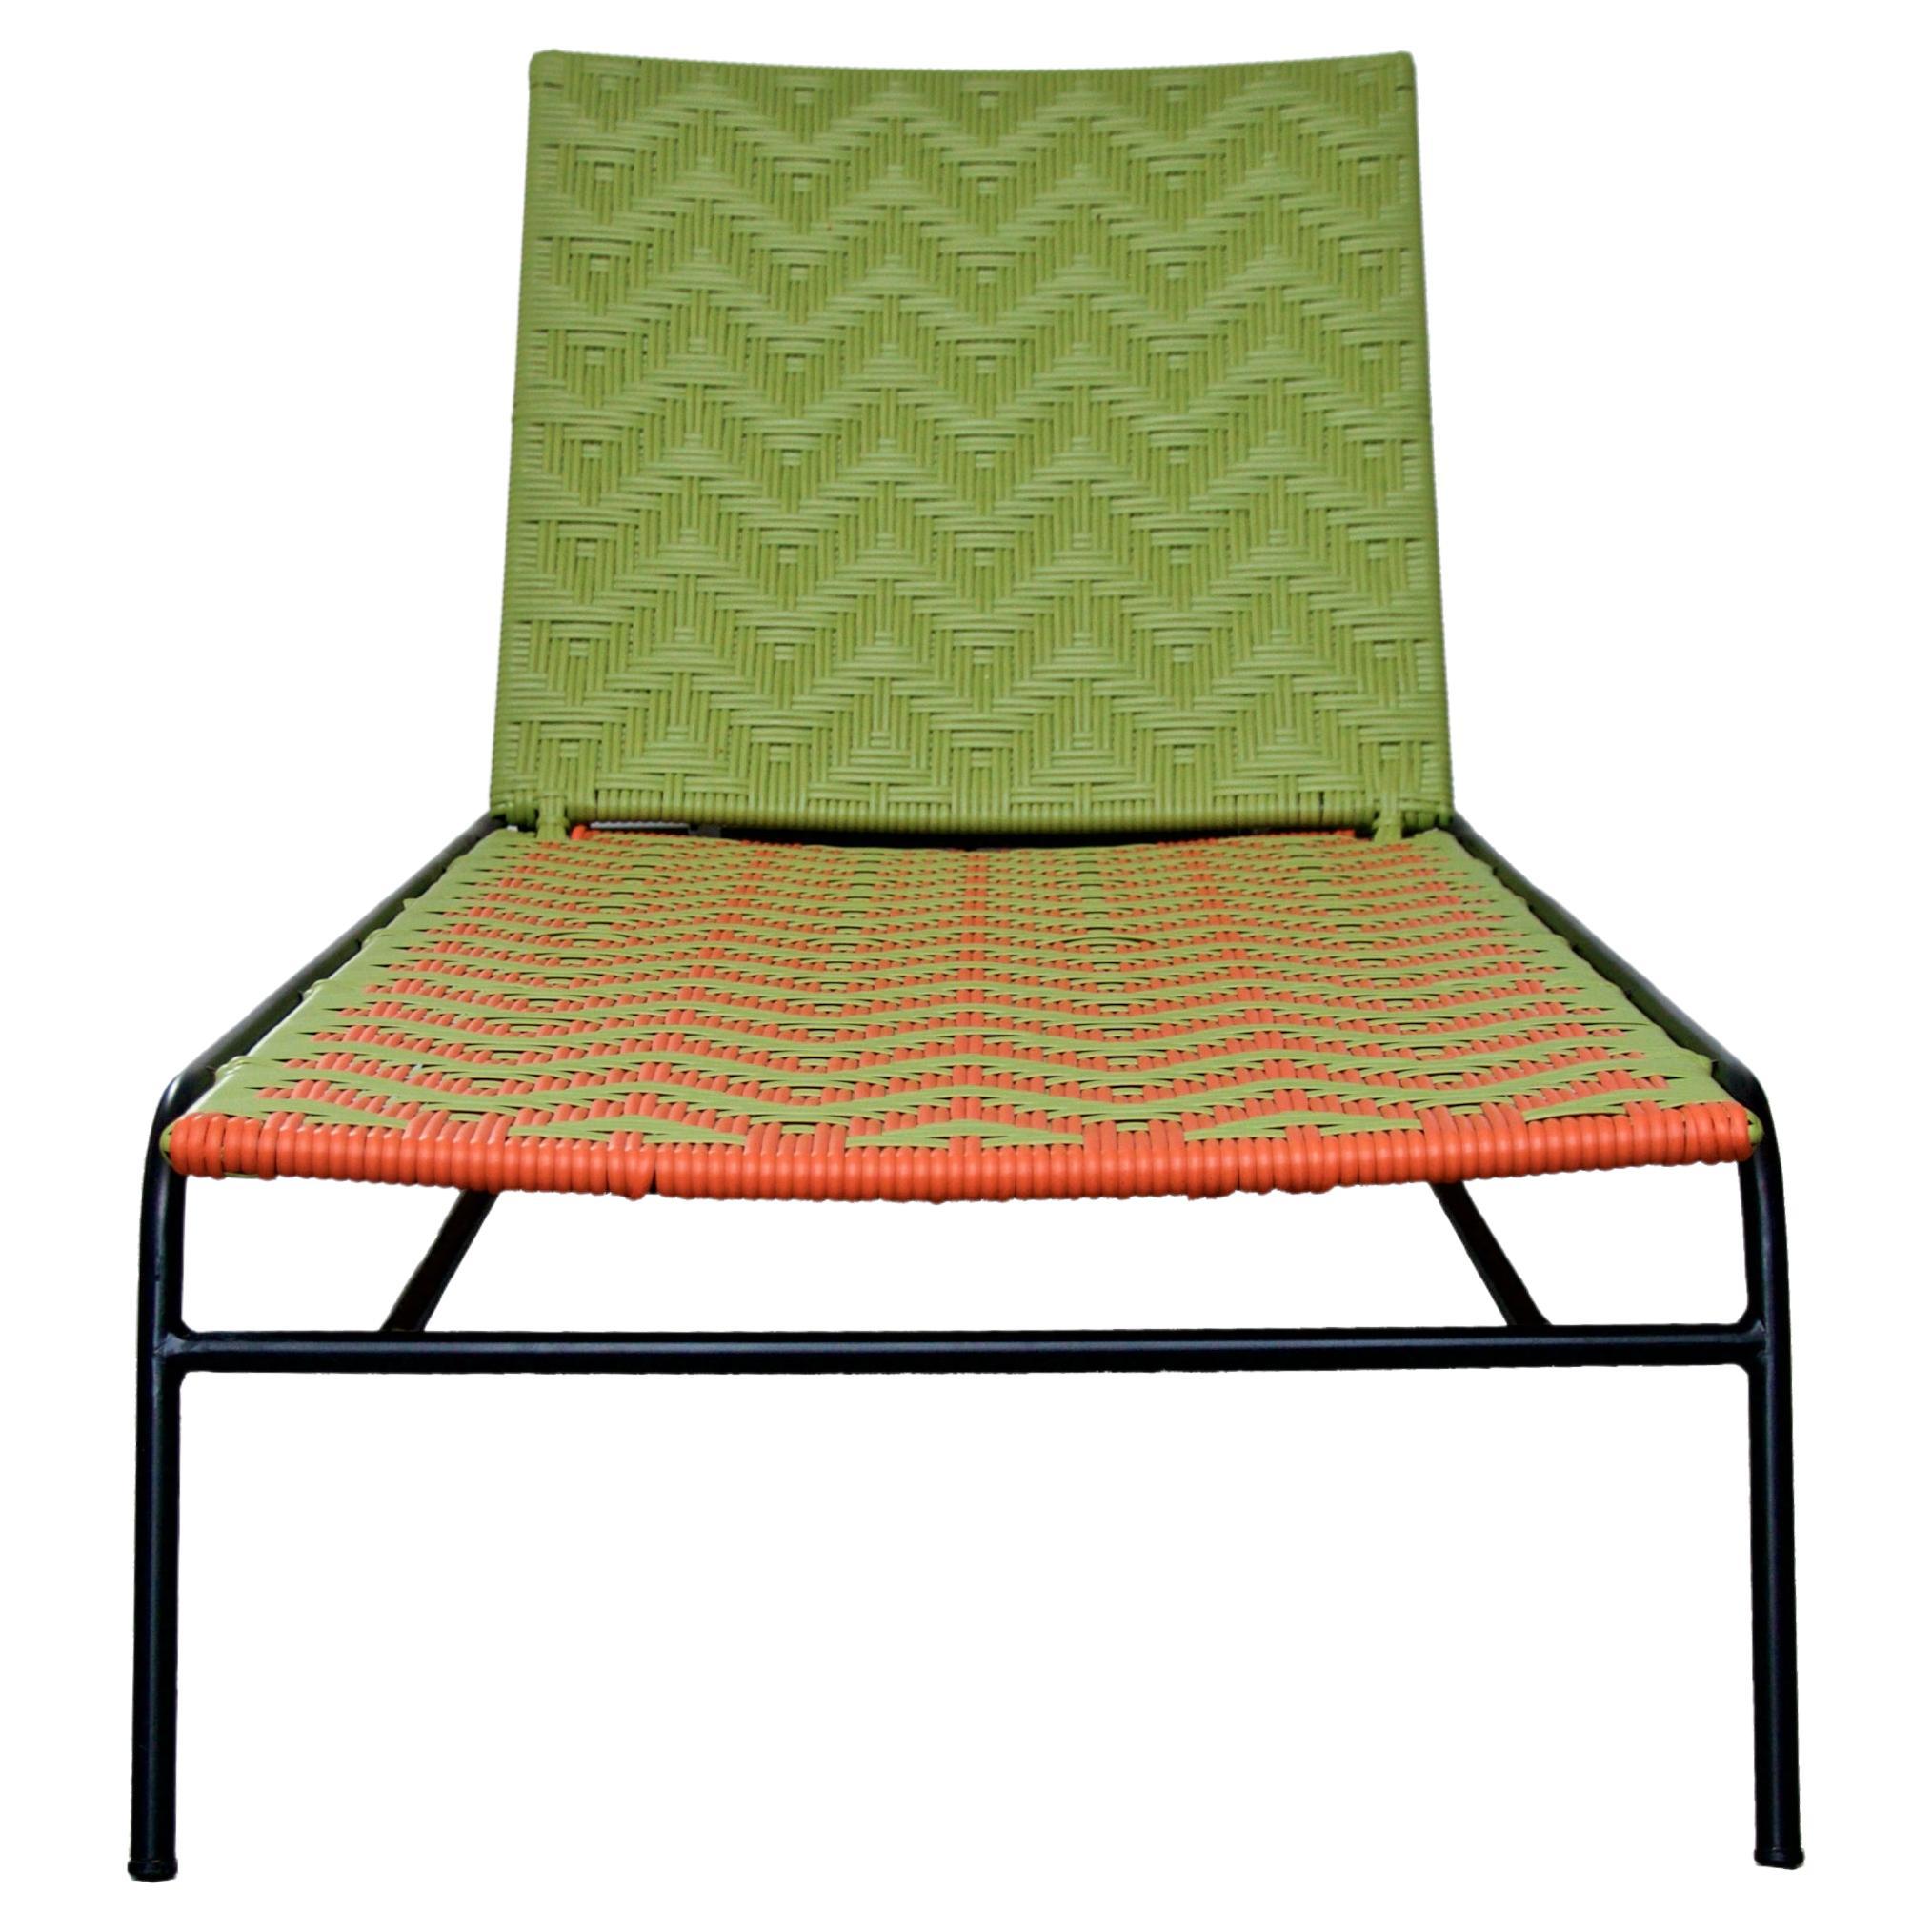 Handwoven Green Sun Lounger Patio Furniture by Frida & Blu